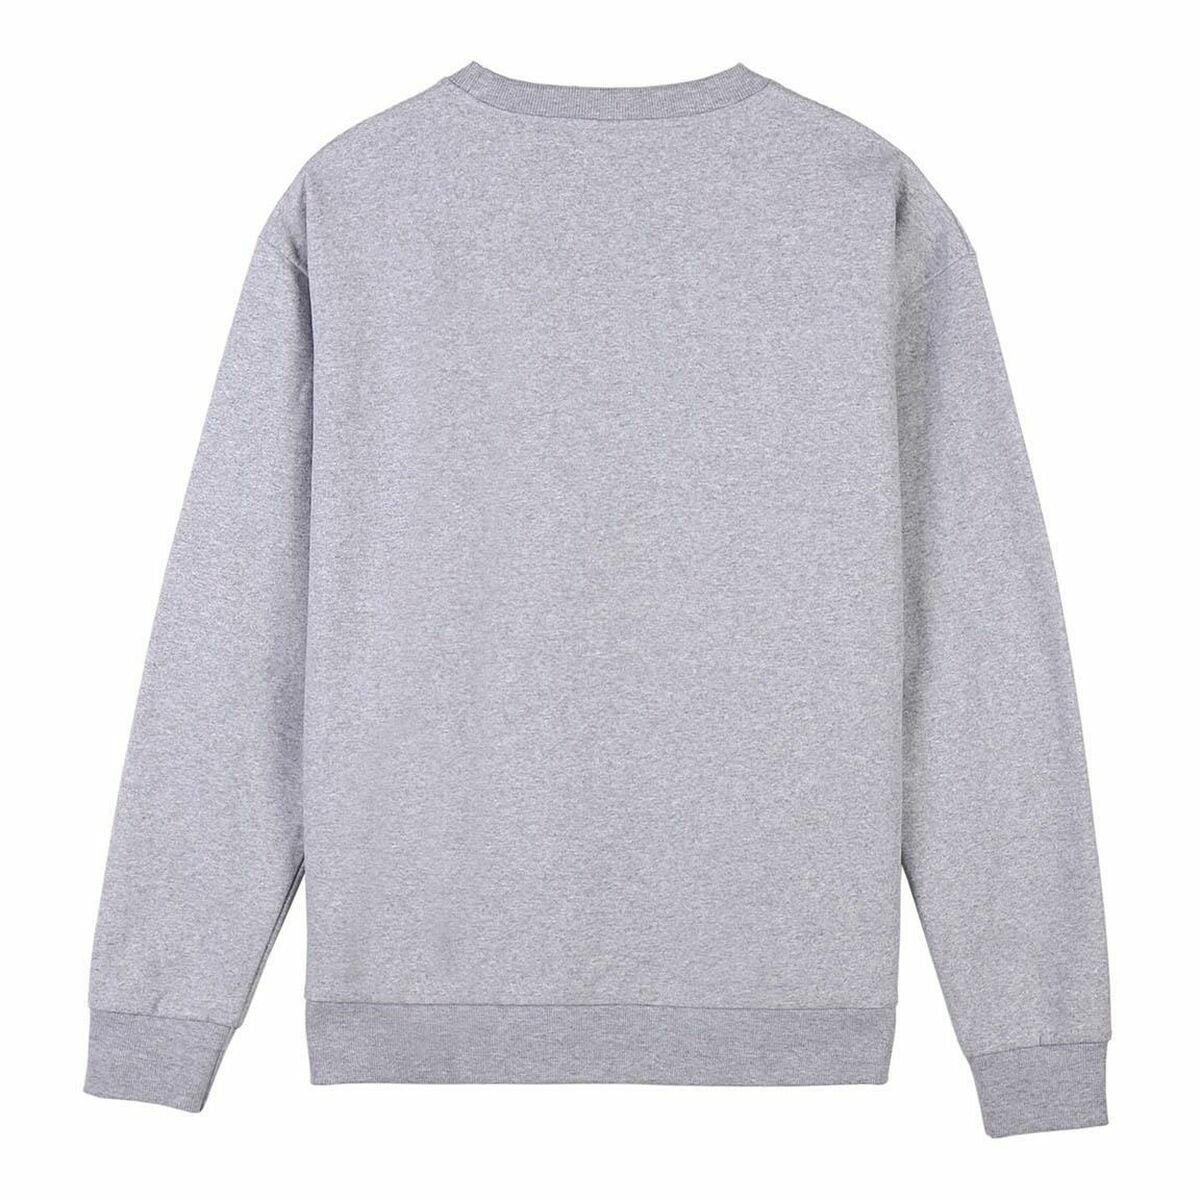 Unisex Sweater ohne Kapuze Mickey Mouse Grau